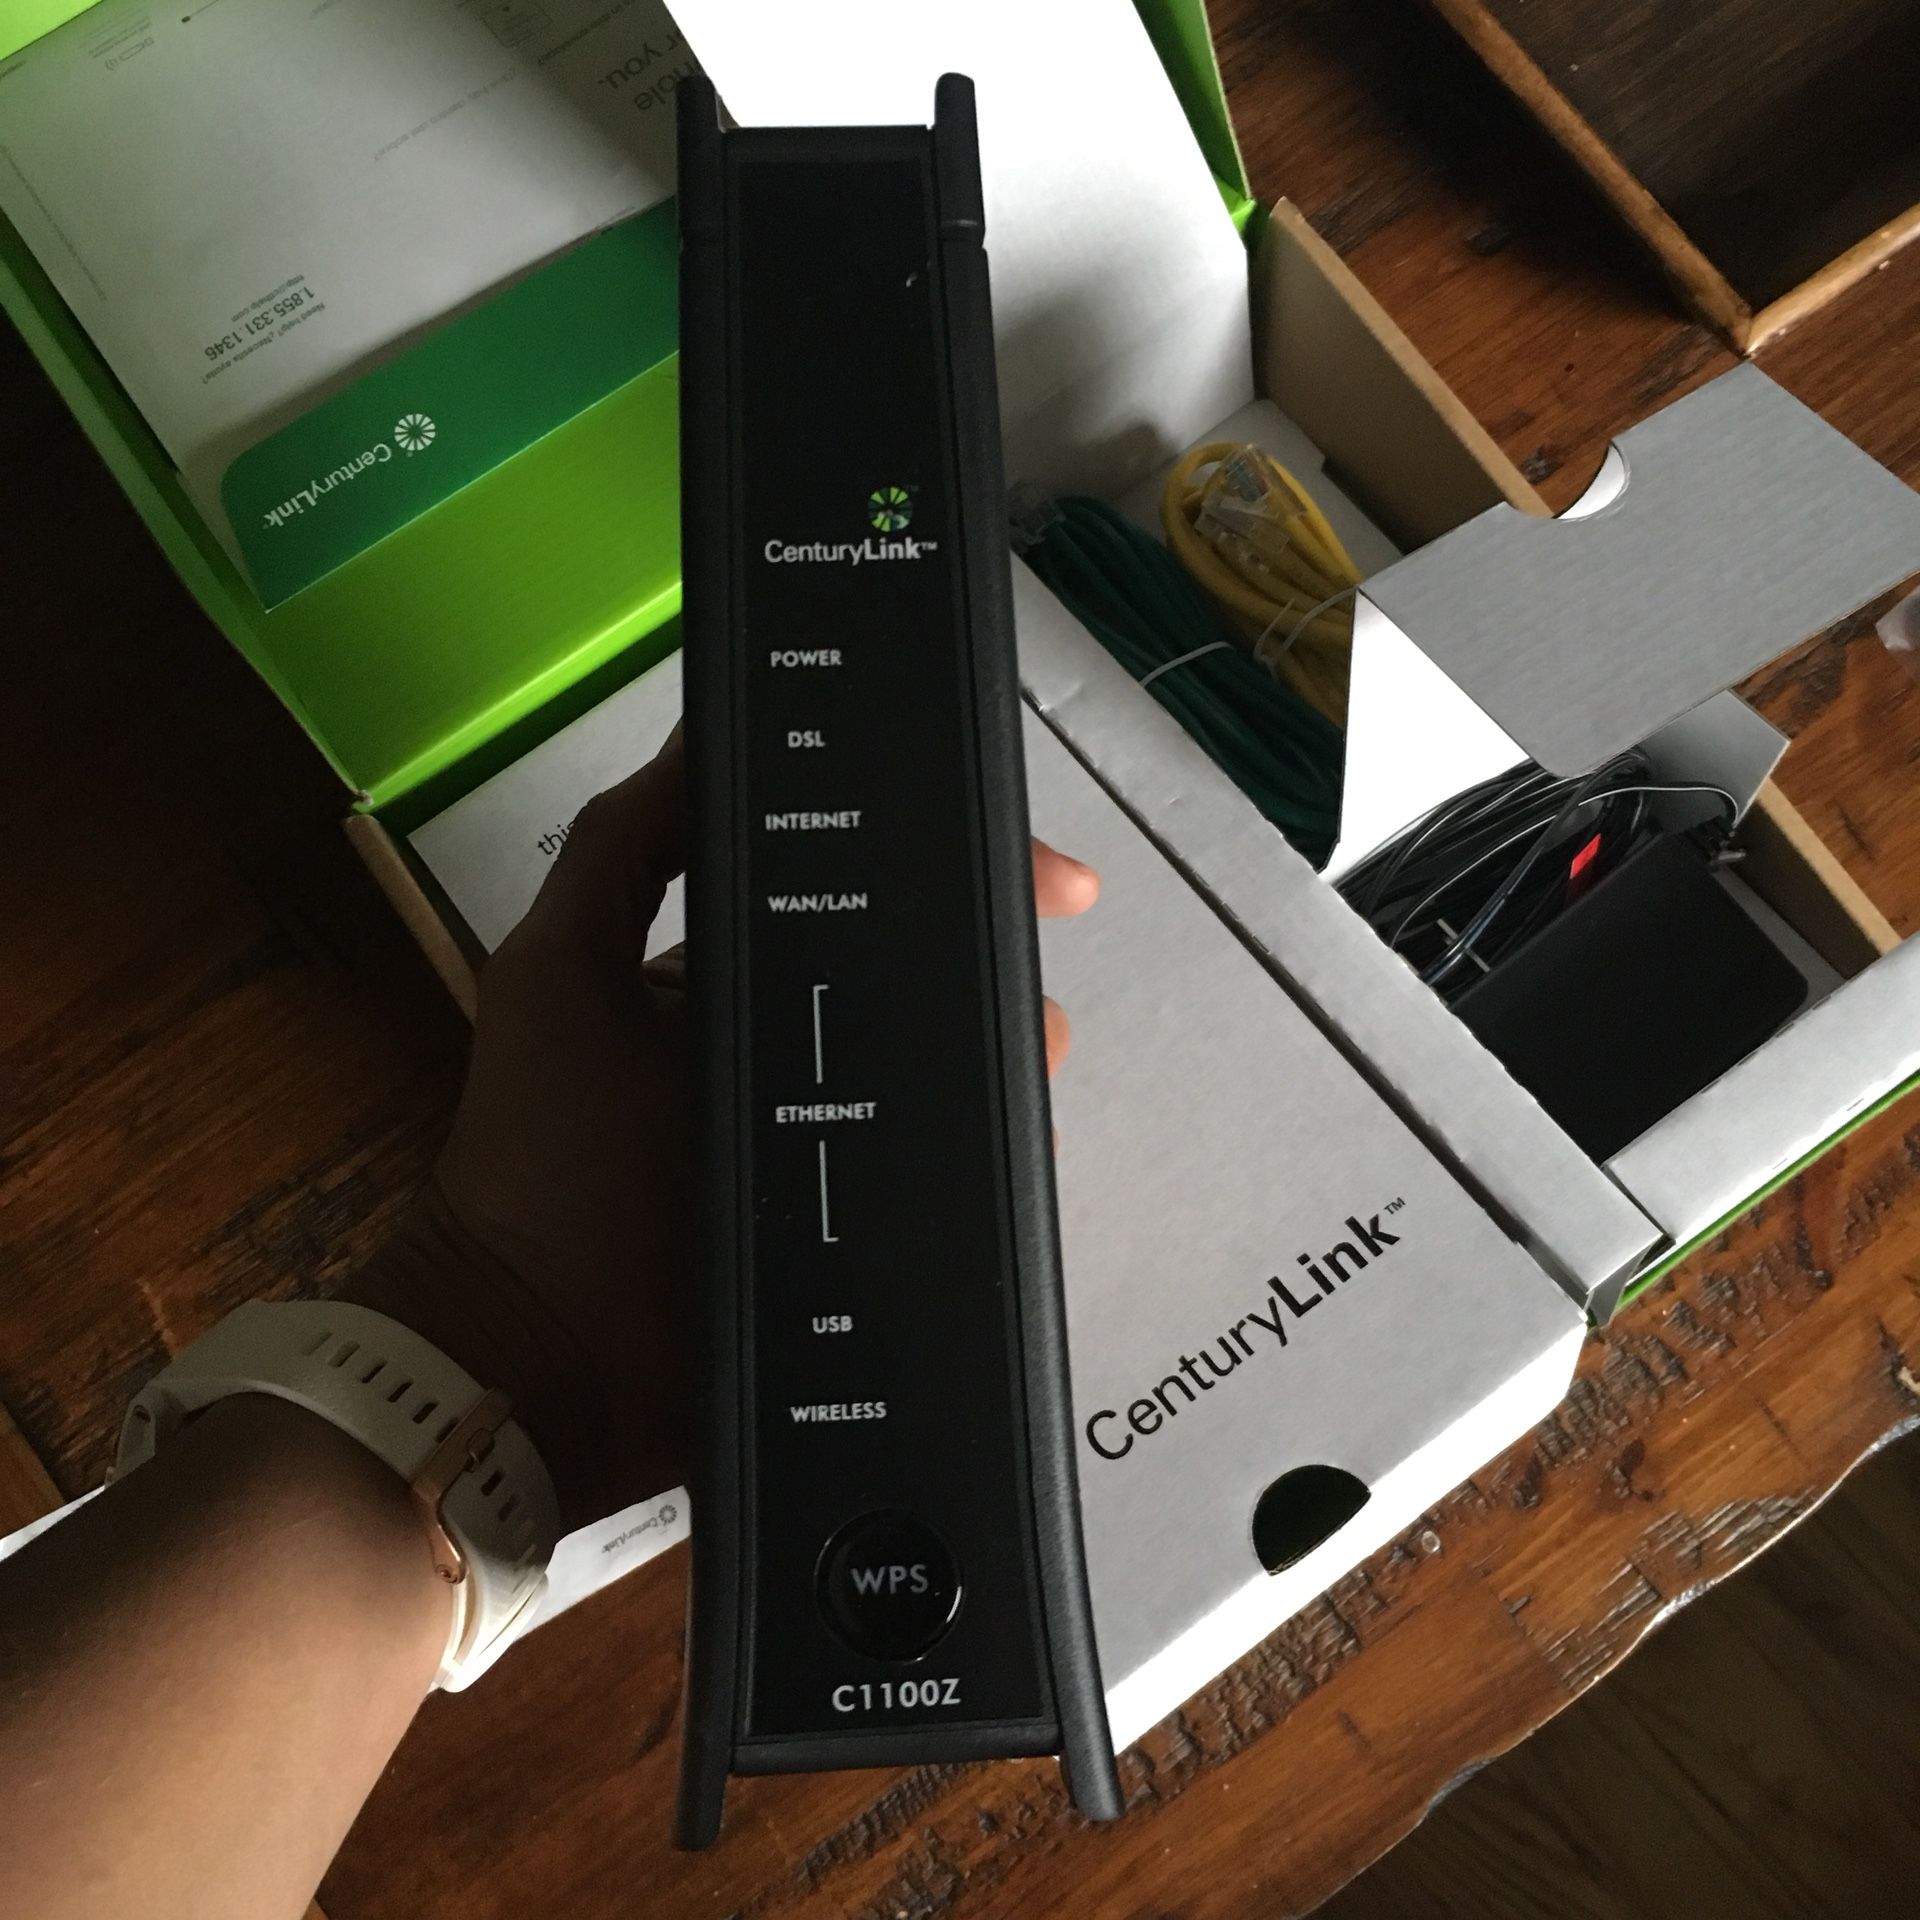 Brand new Centurylink router/modem